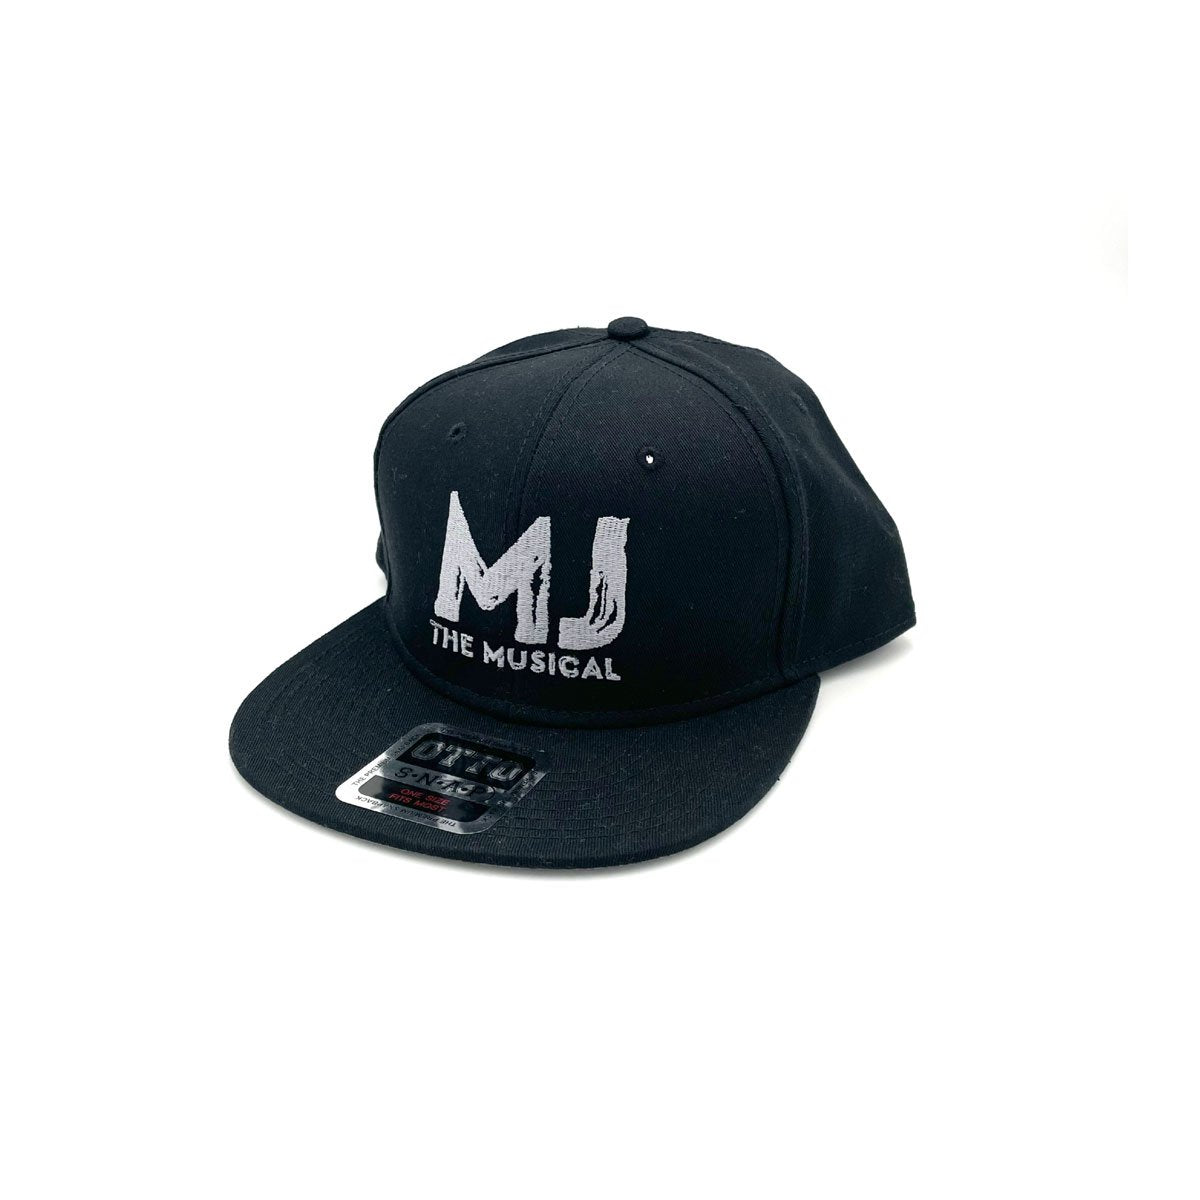 MJ THE MUSICAL Logo Flat Brim Cap - Black Image